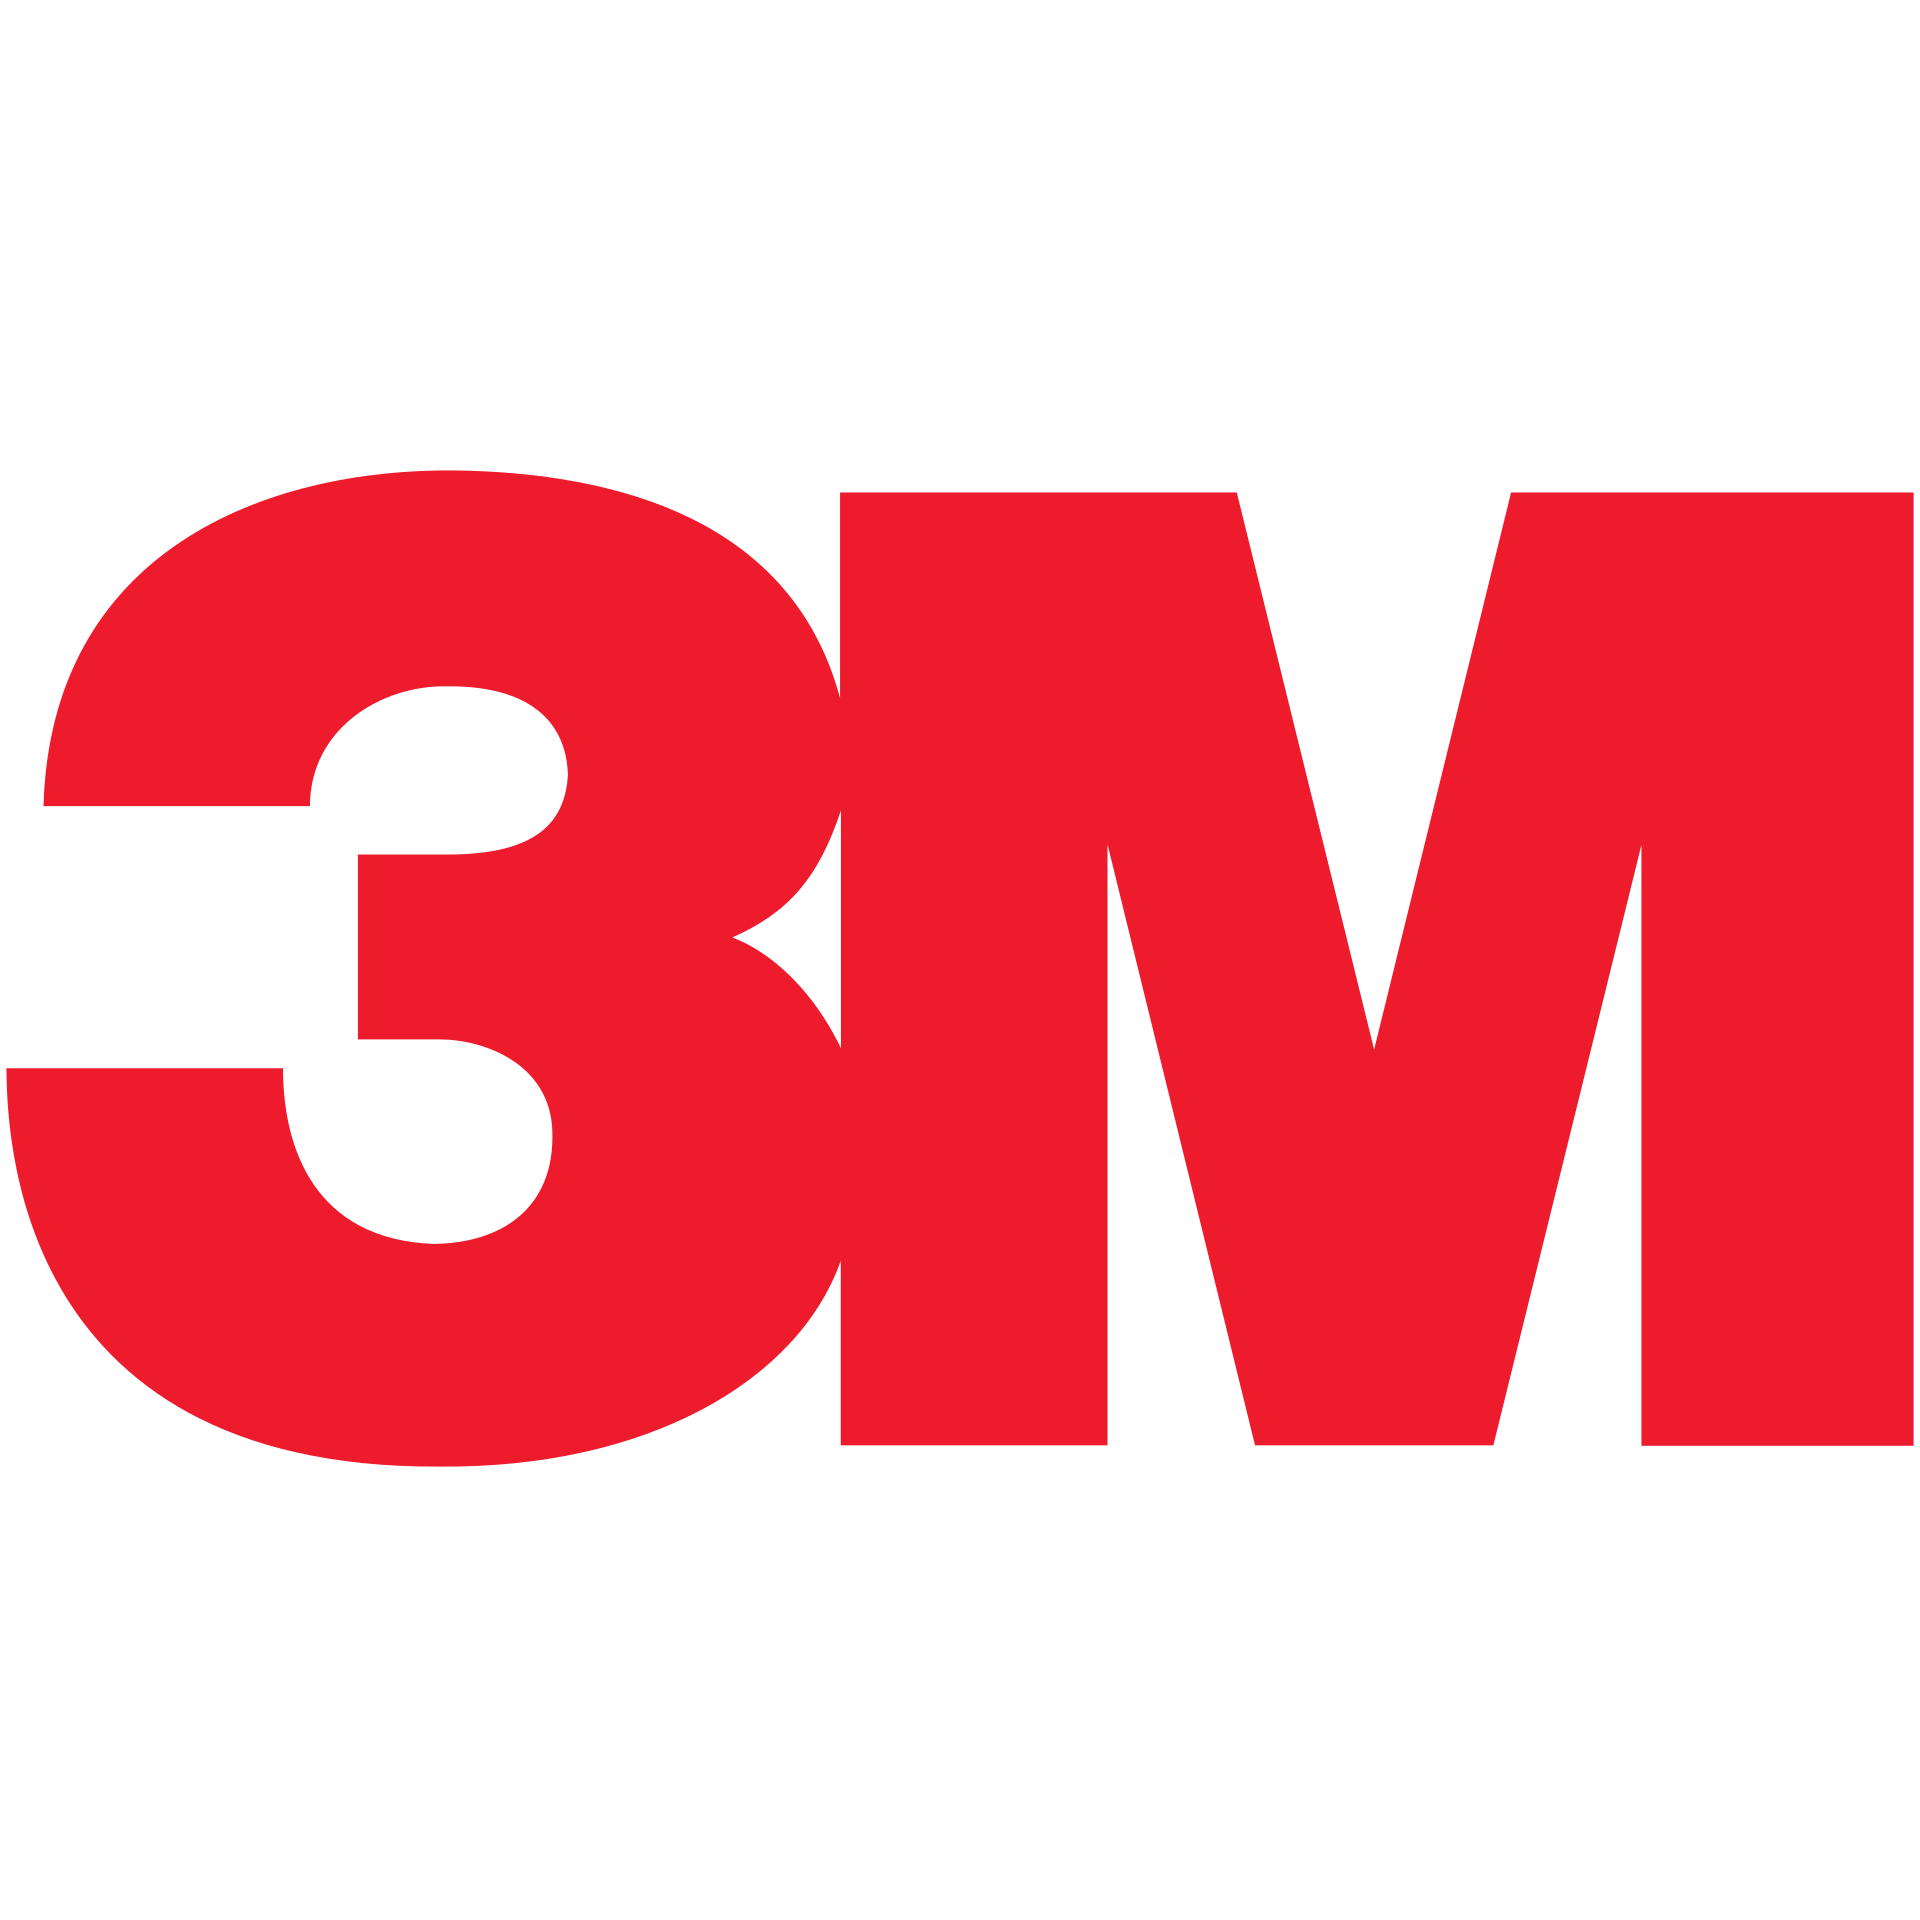 3M India logo in transparent PNG format